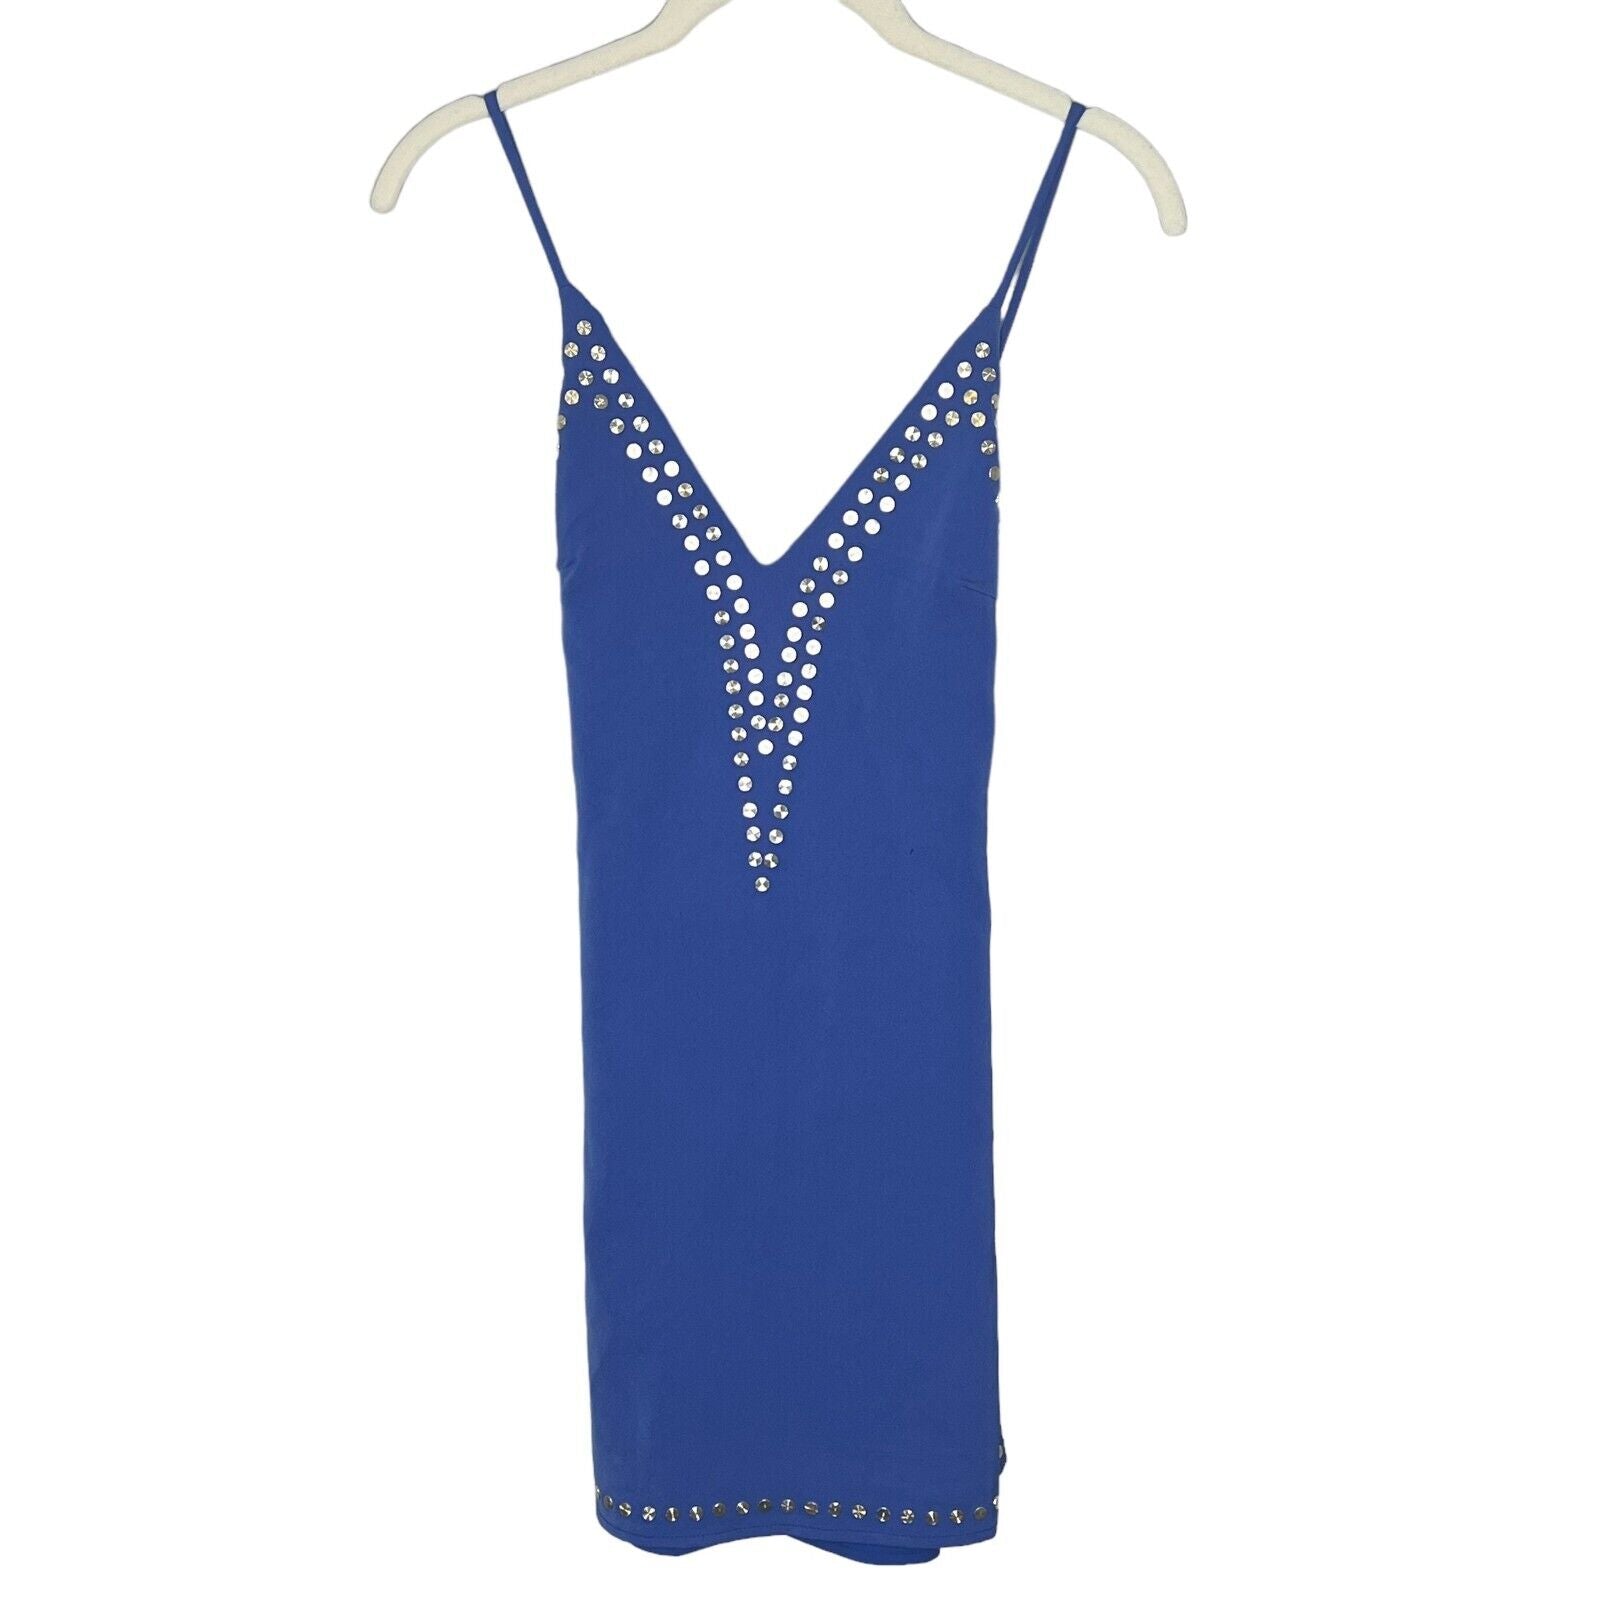 NBD x Naven Zara Blue Mini Dress w Silver Size Small NEW